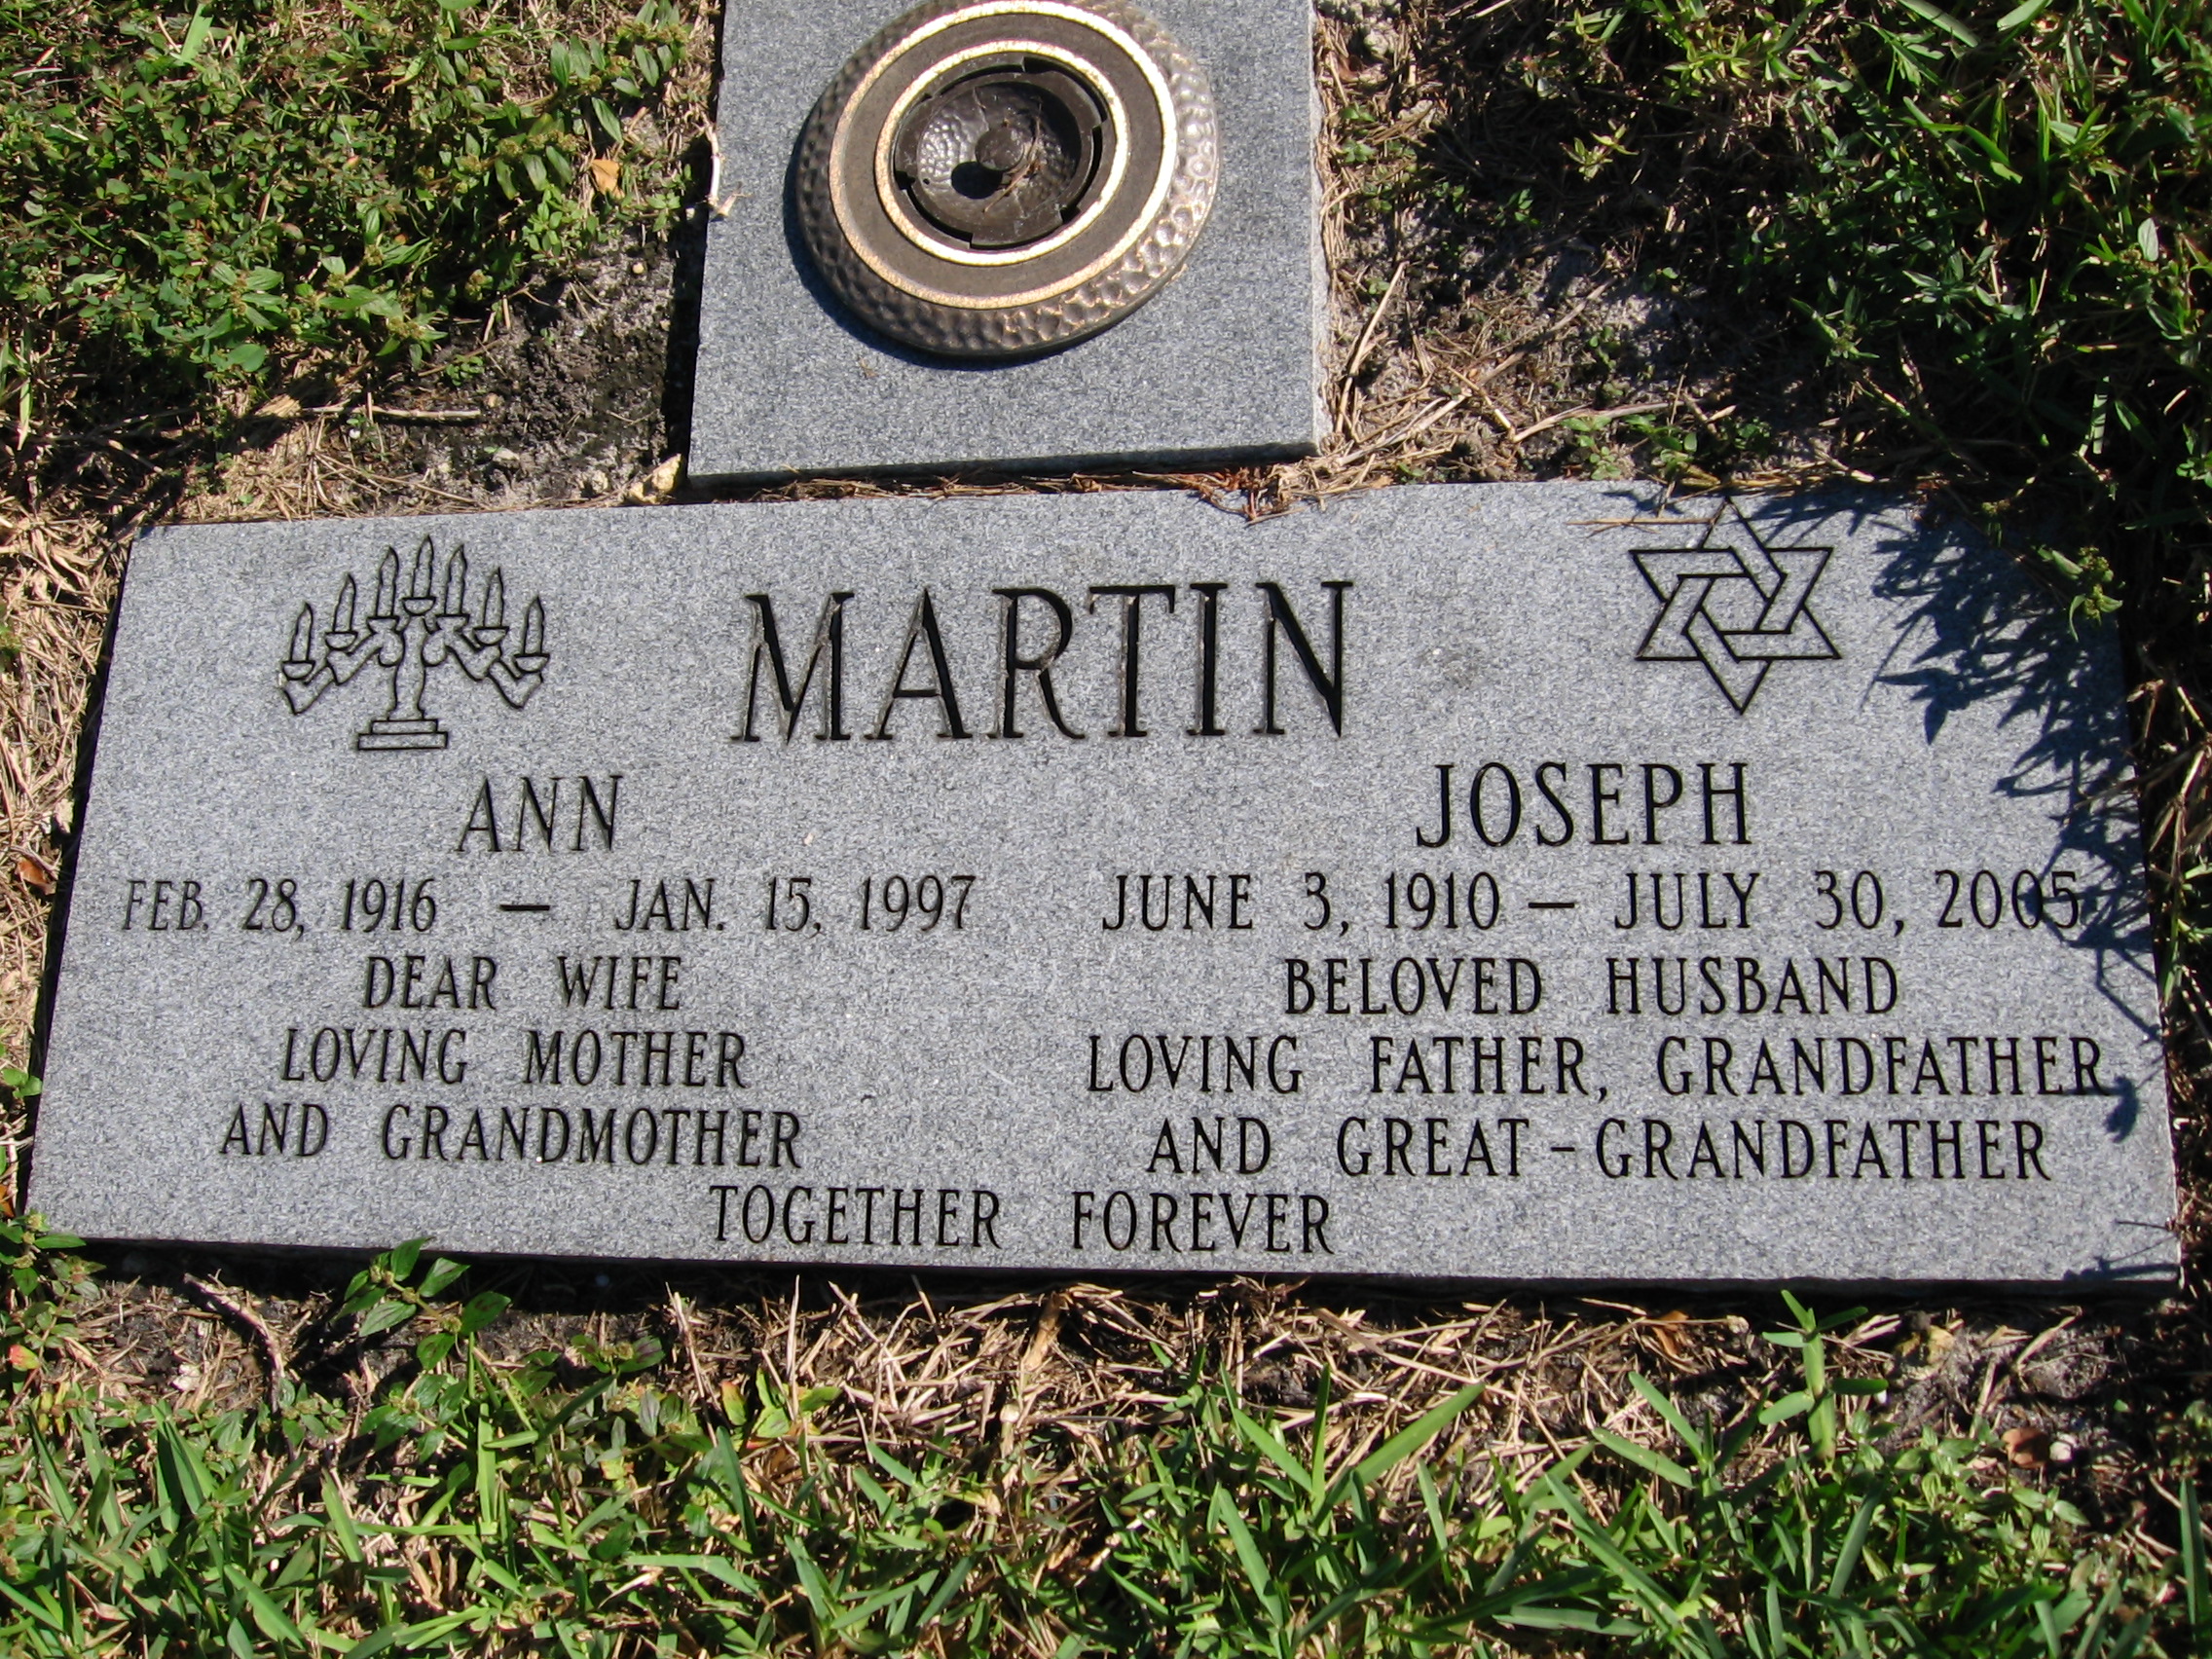 Joseph Martin